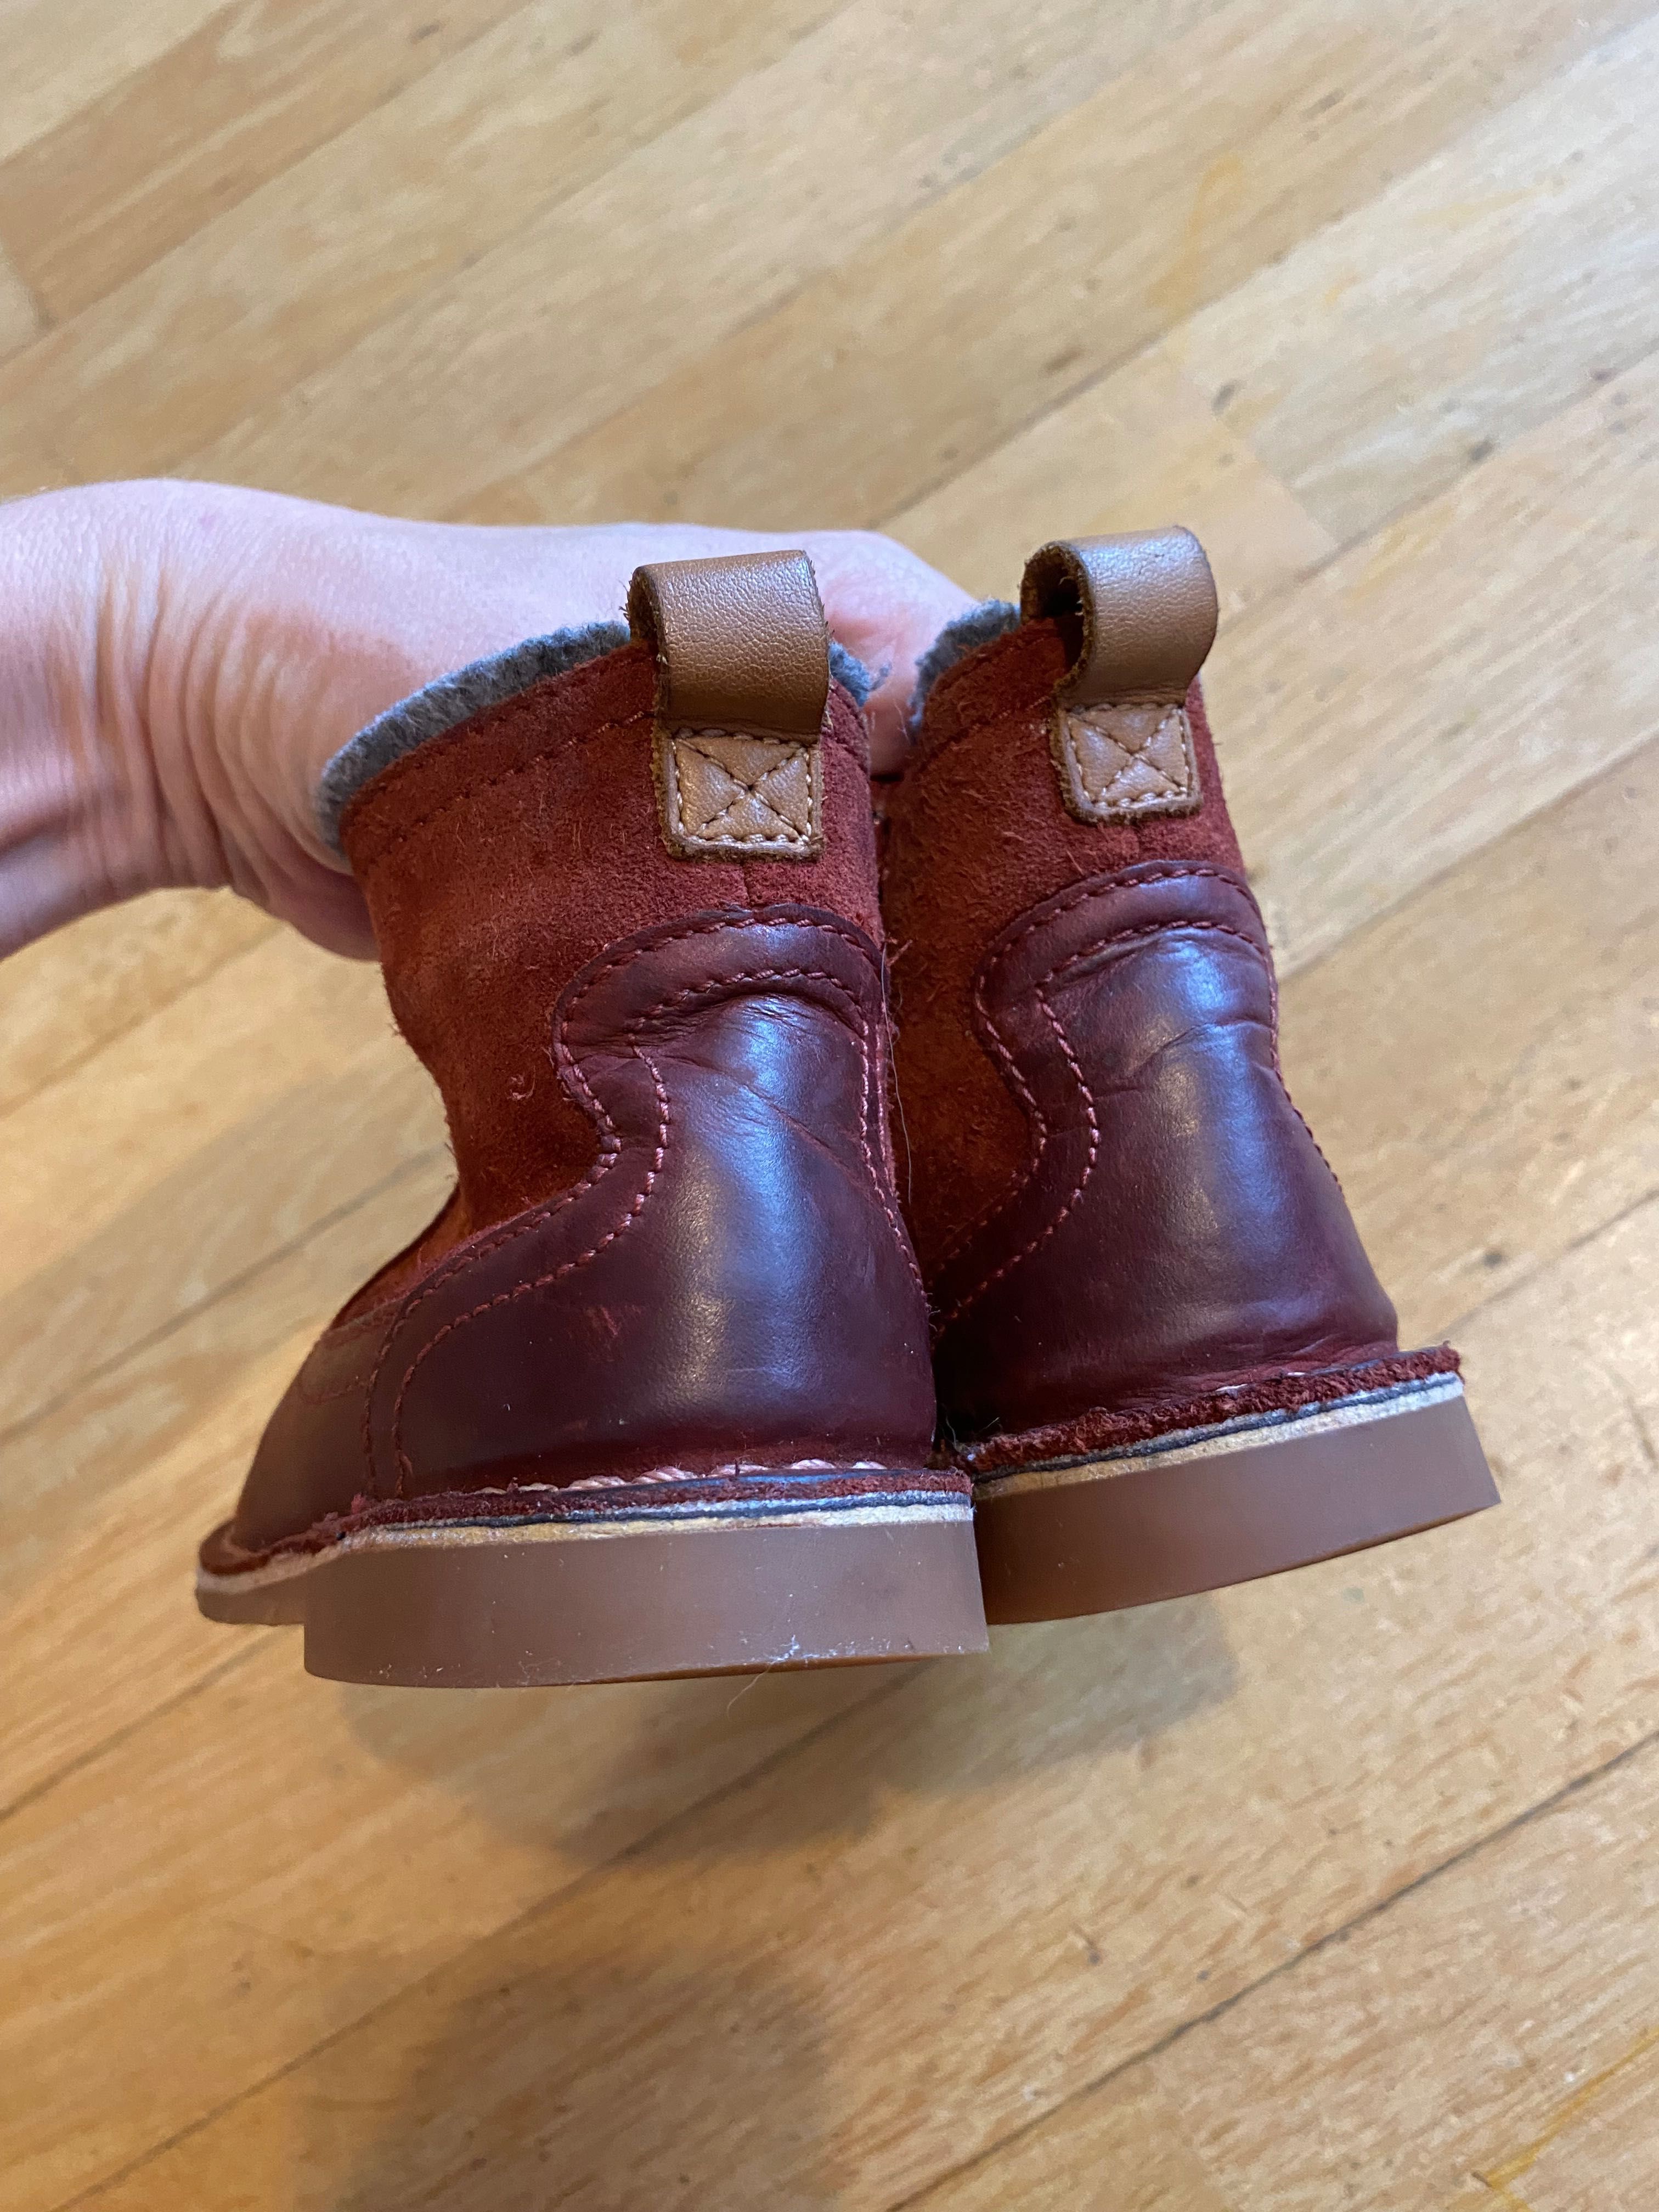 Botki buty clarks 21 chelsea burgundowe bordowe wkładka 13 cm skórzane